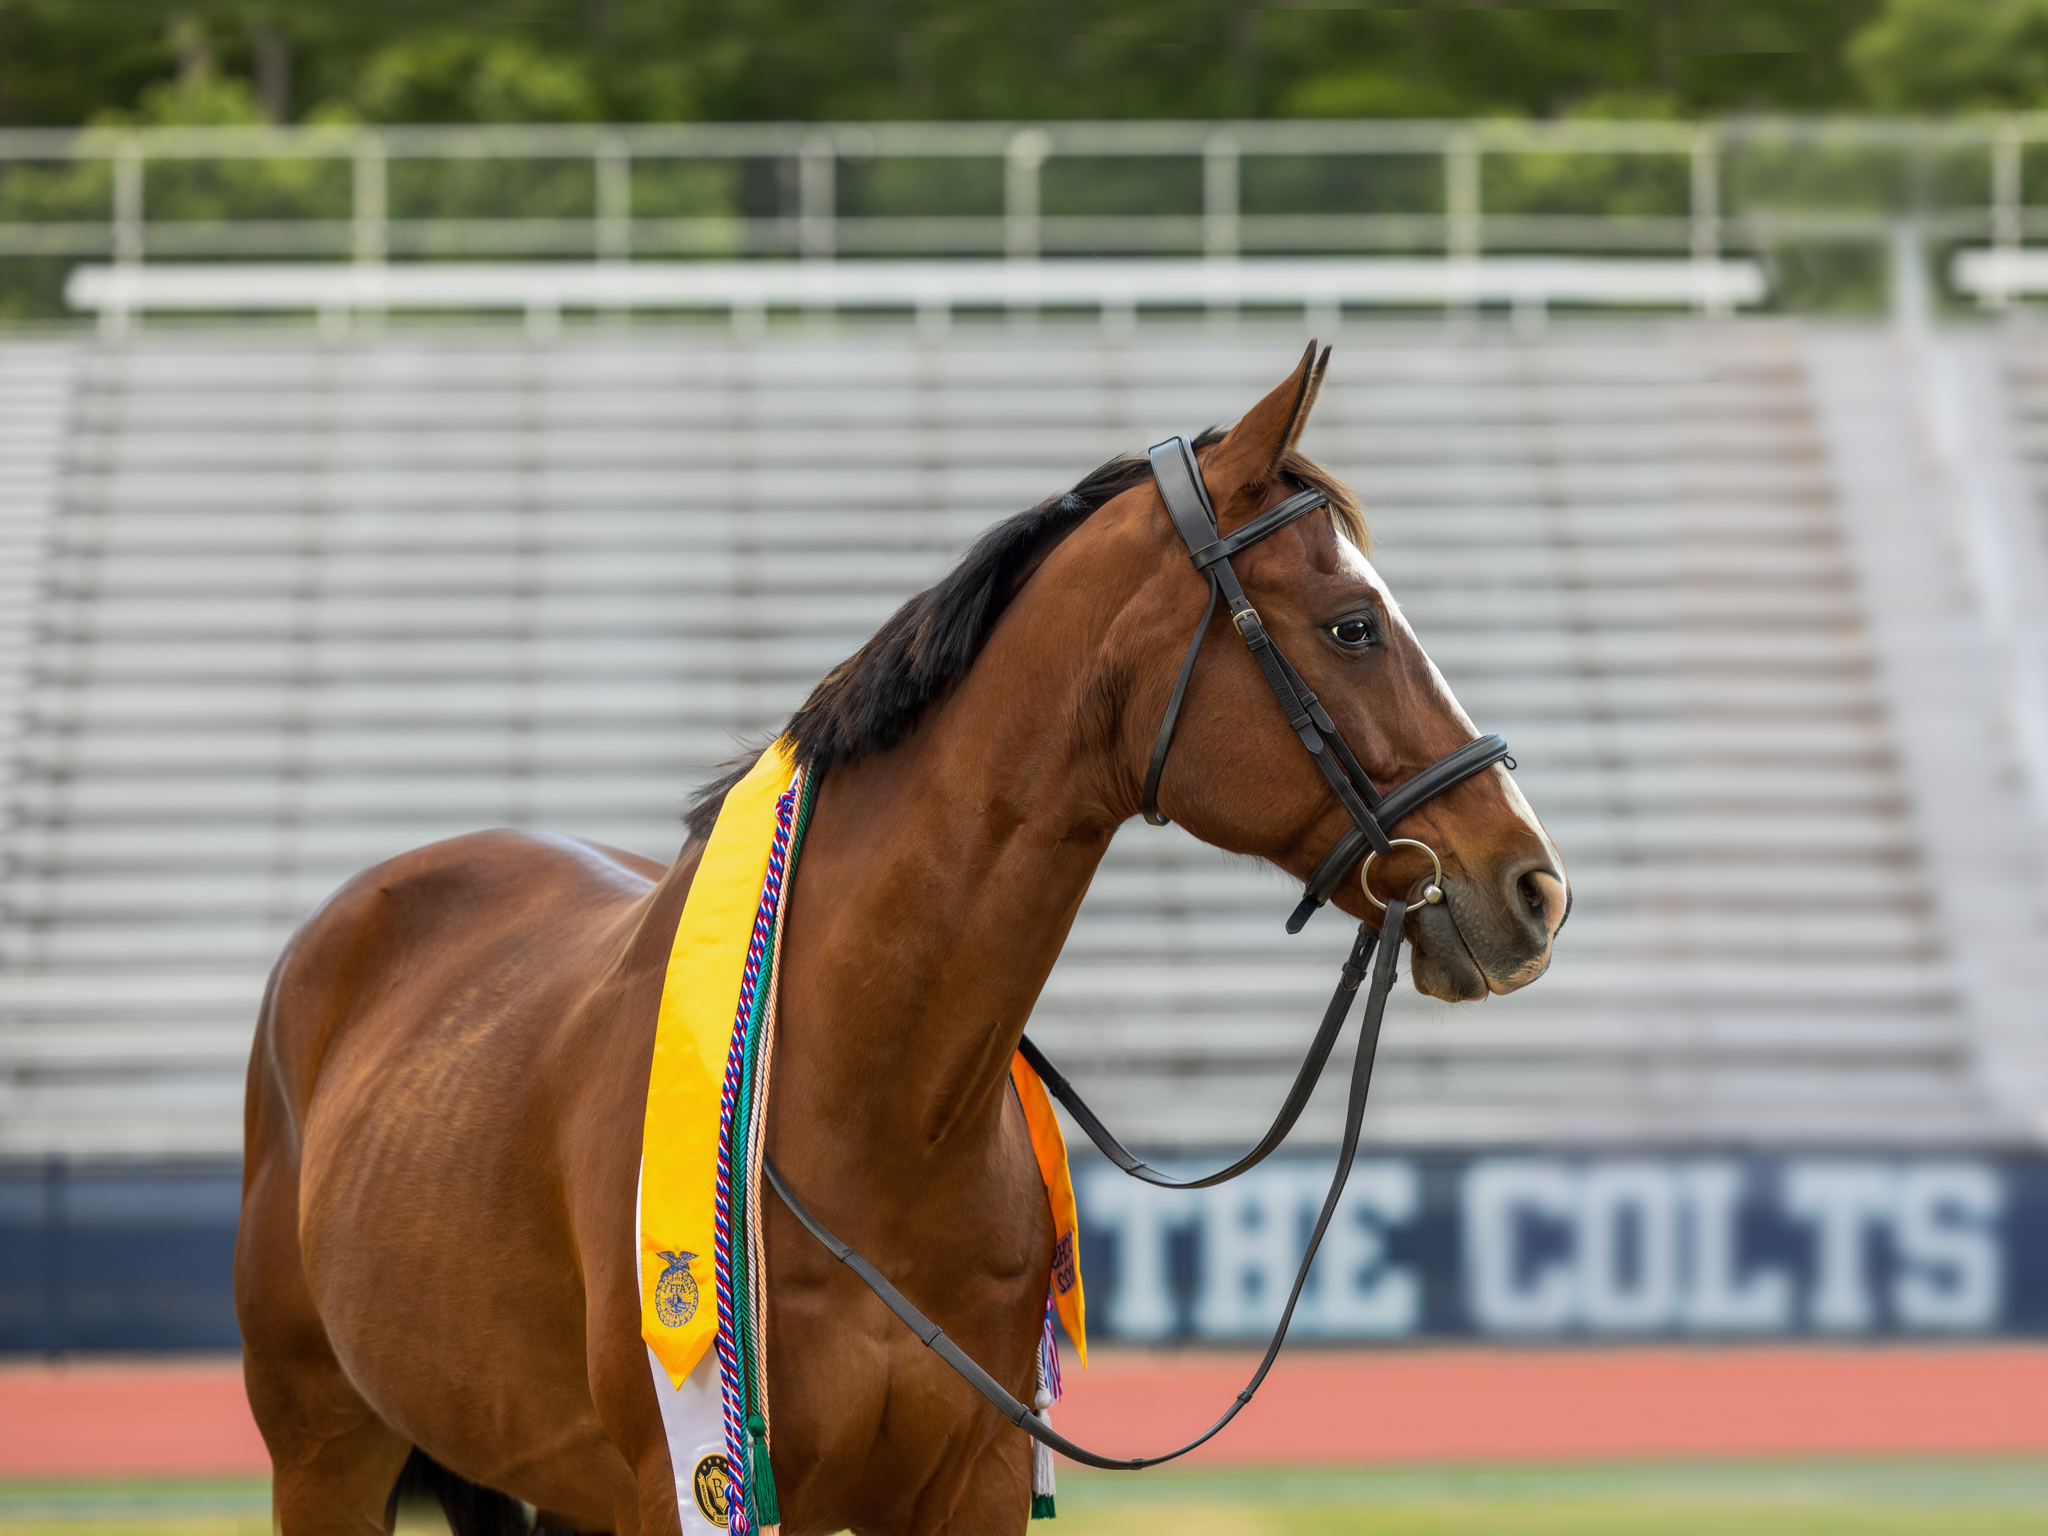 Horse photographed on high school football field with high school senior's tassles